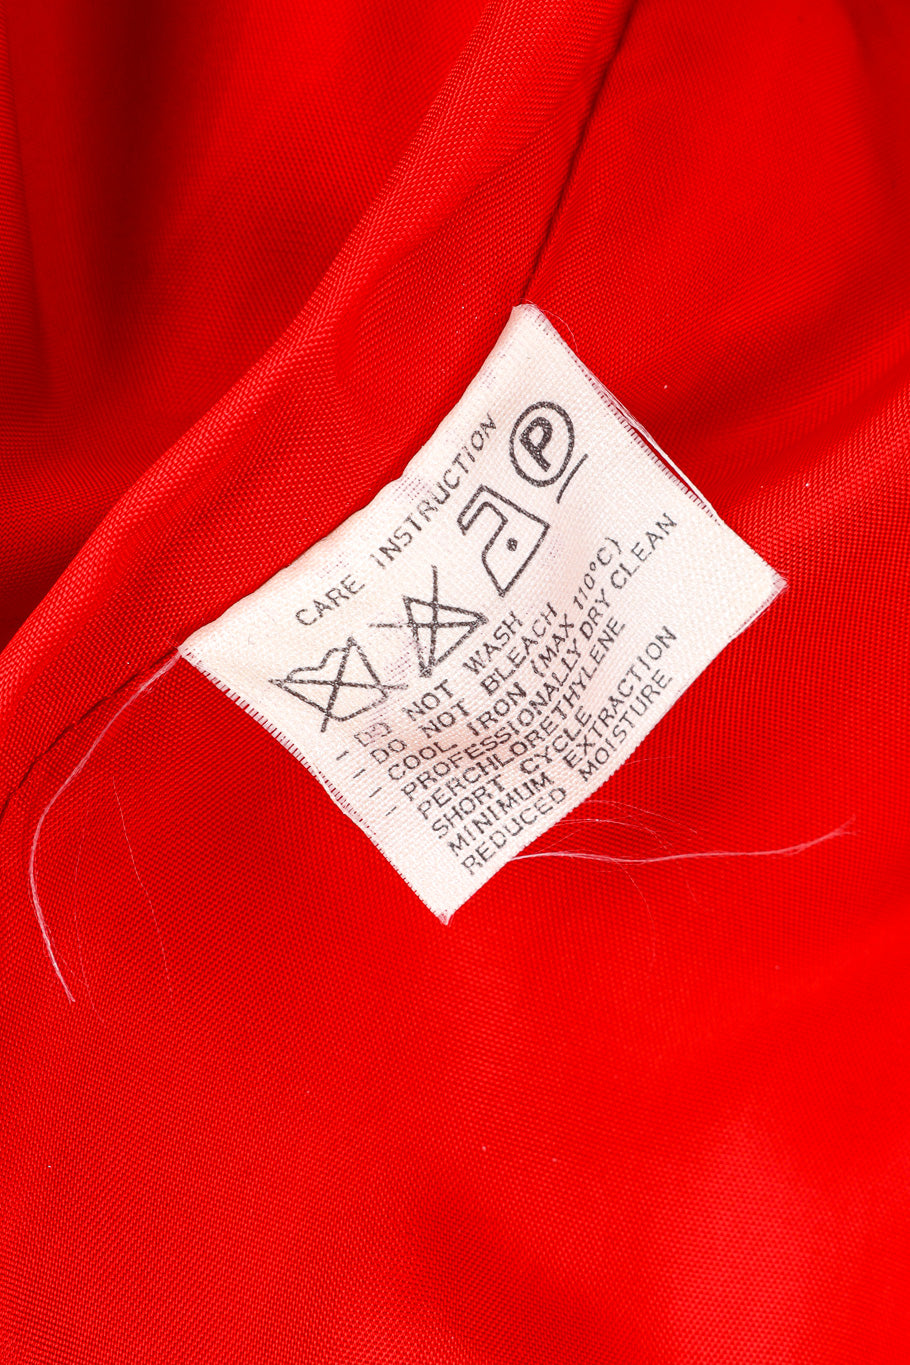 Cutout Shirtdress by Claude Montana fabric tag @recessla